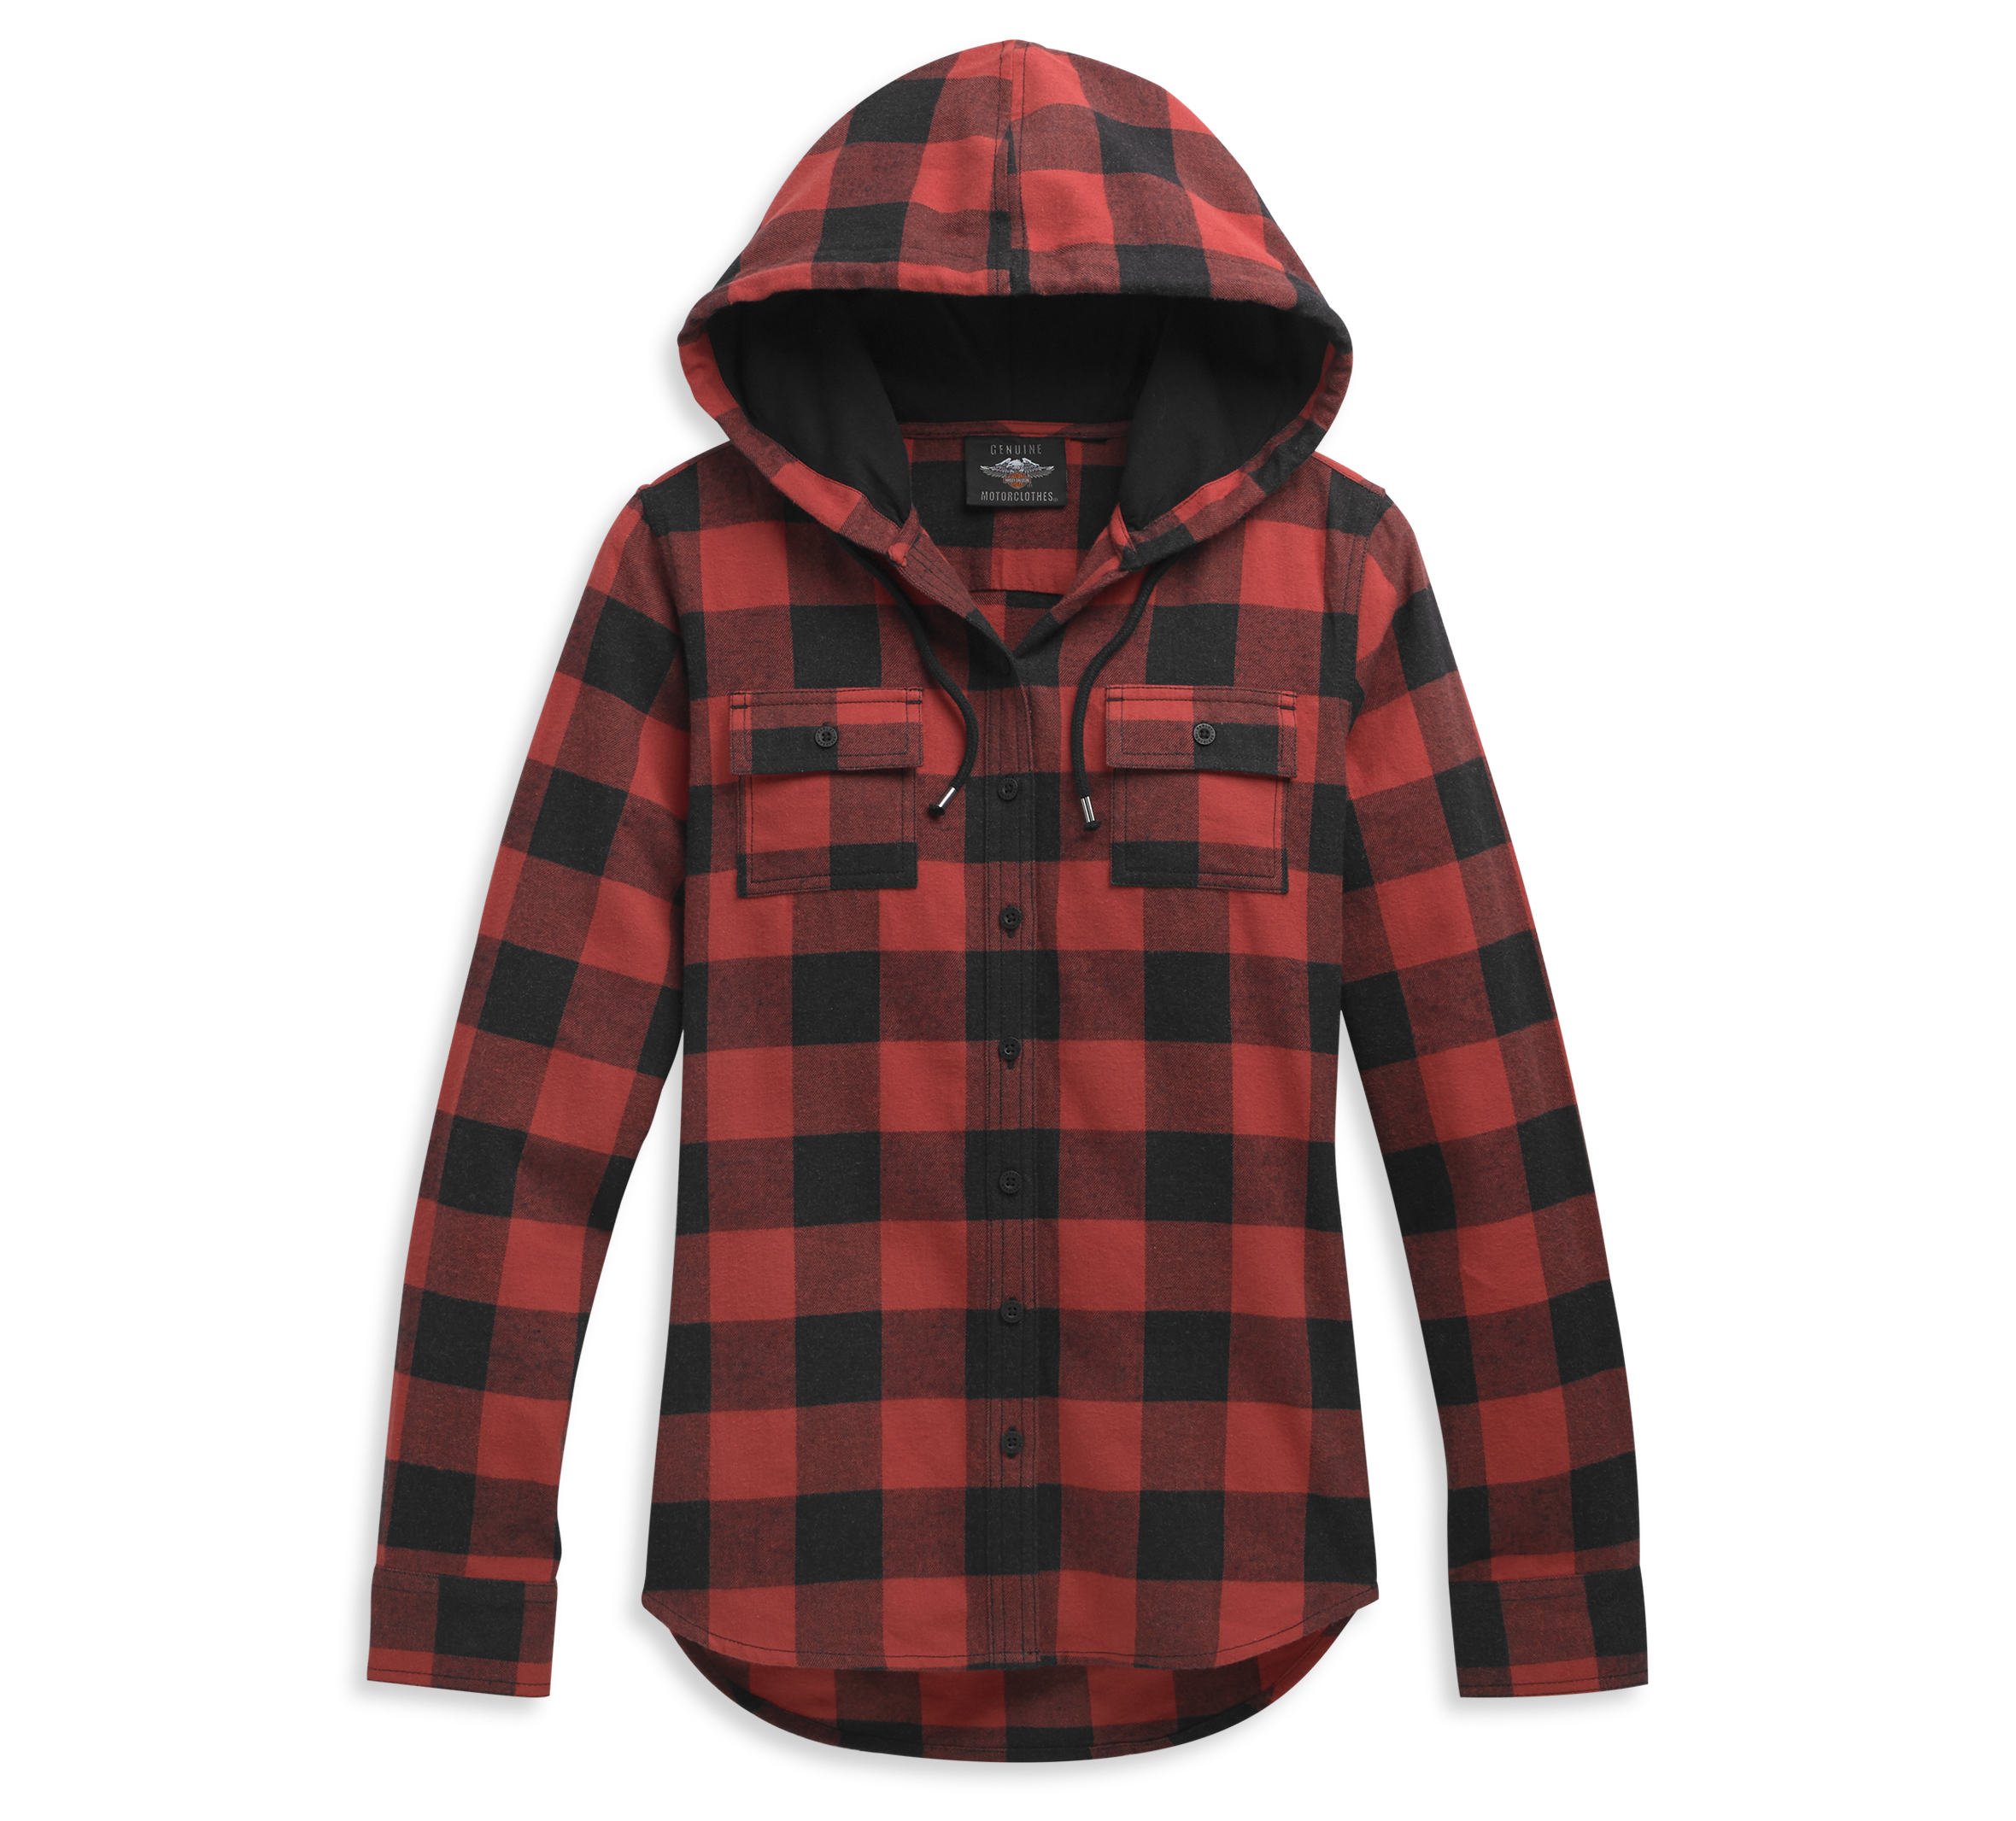 Buy > harley davidson hooded flannel shirt jacket > in stock